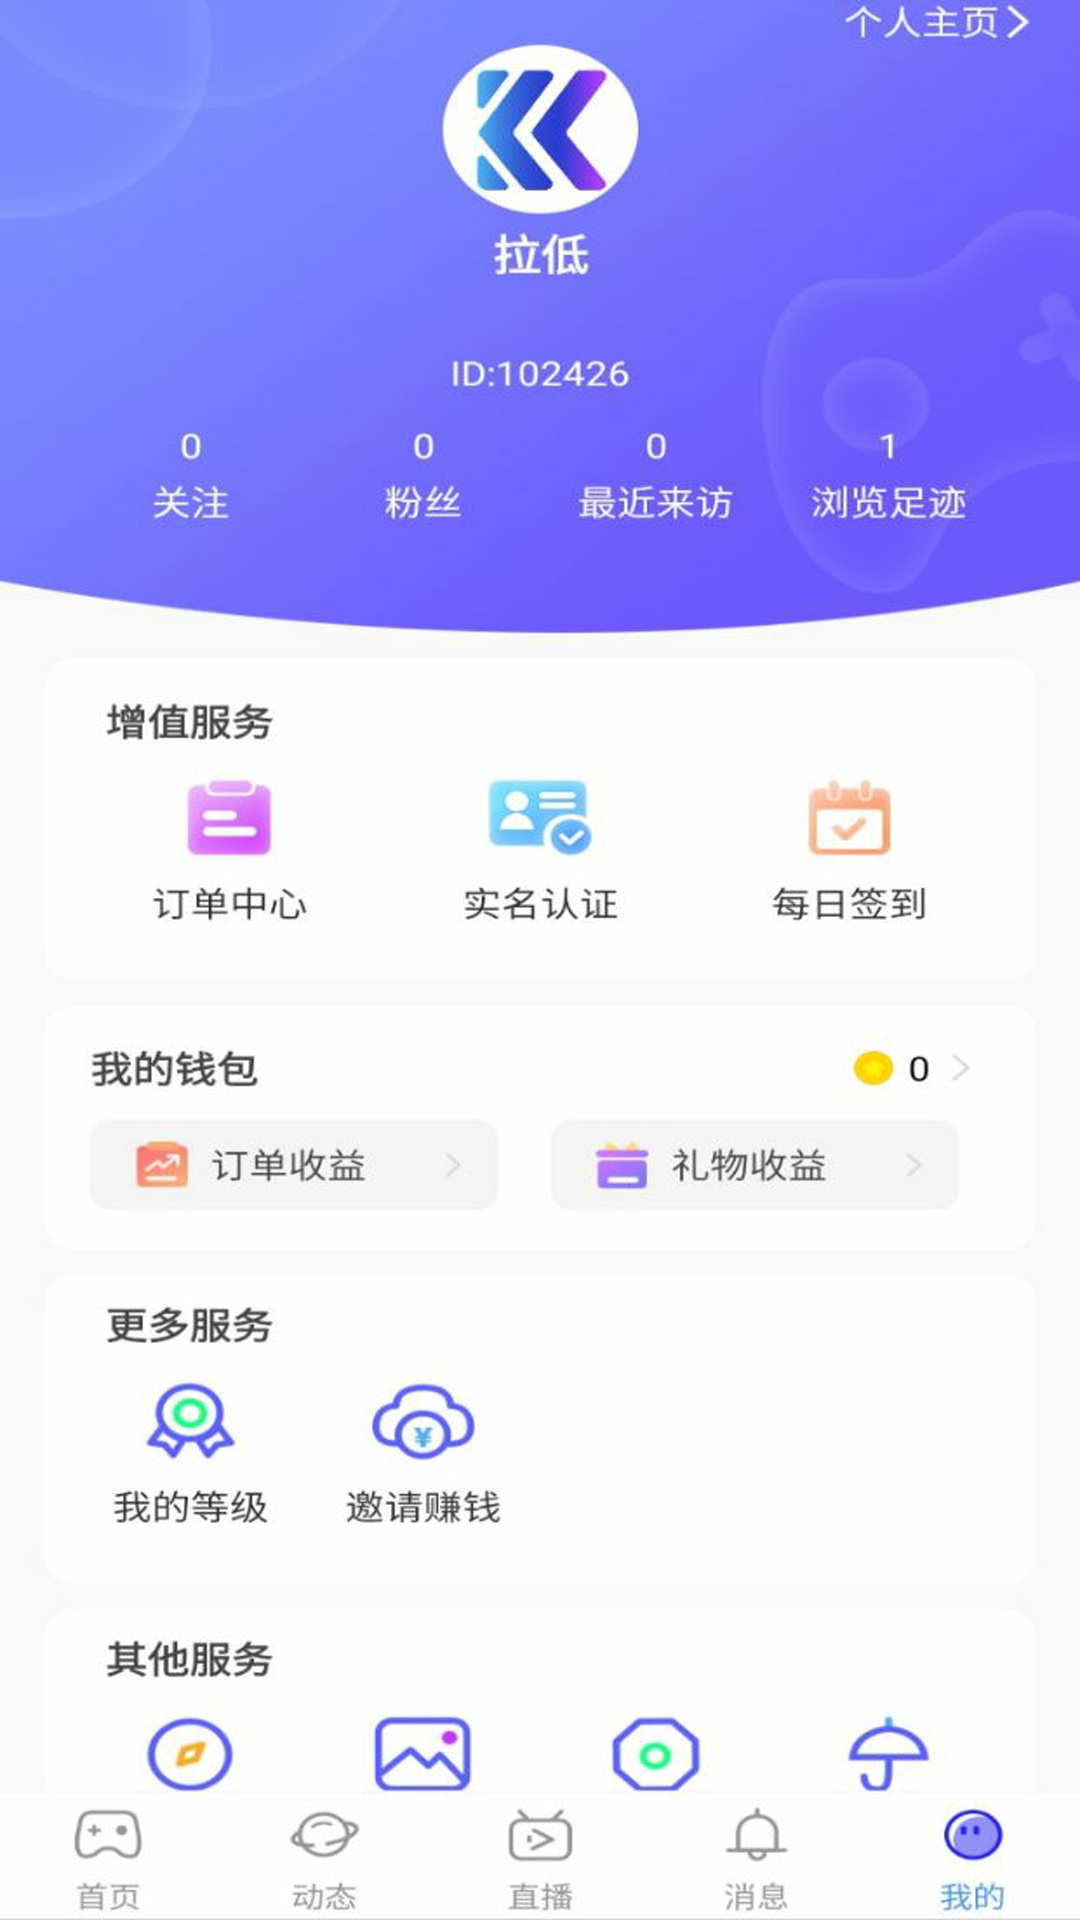 KK组队交友app官方版图1: